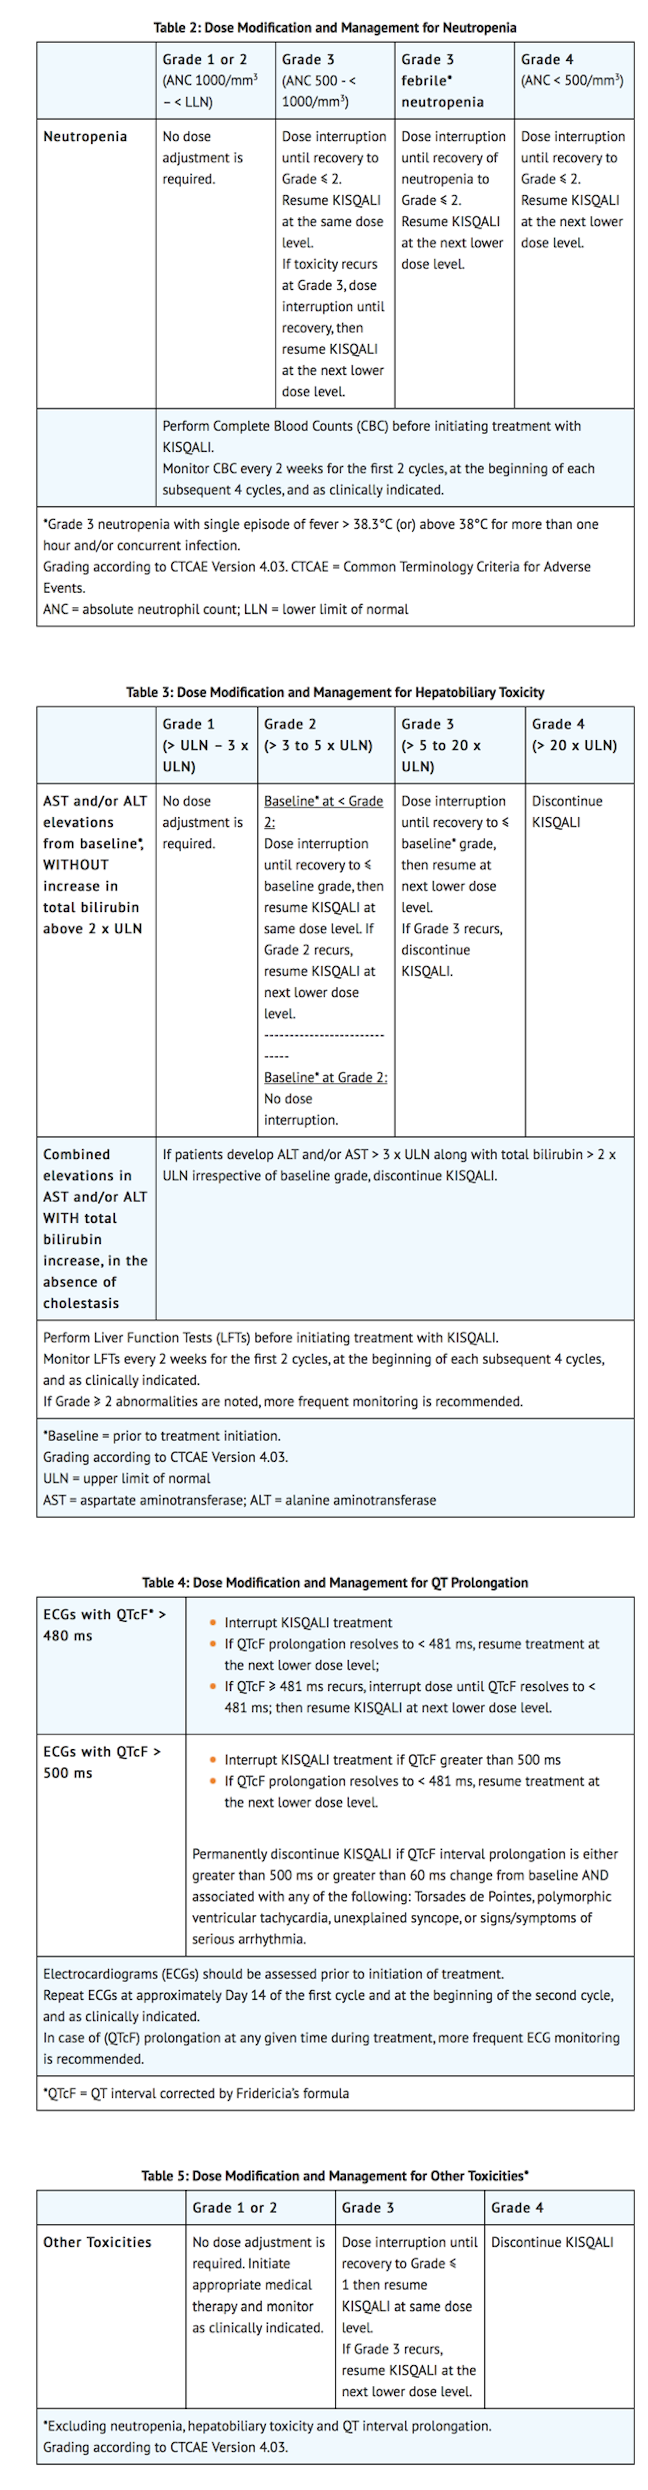 File:Ribociclib Dosage Tables 2-5.png